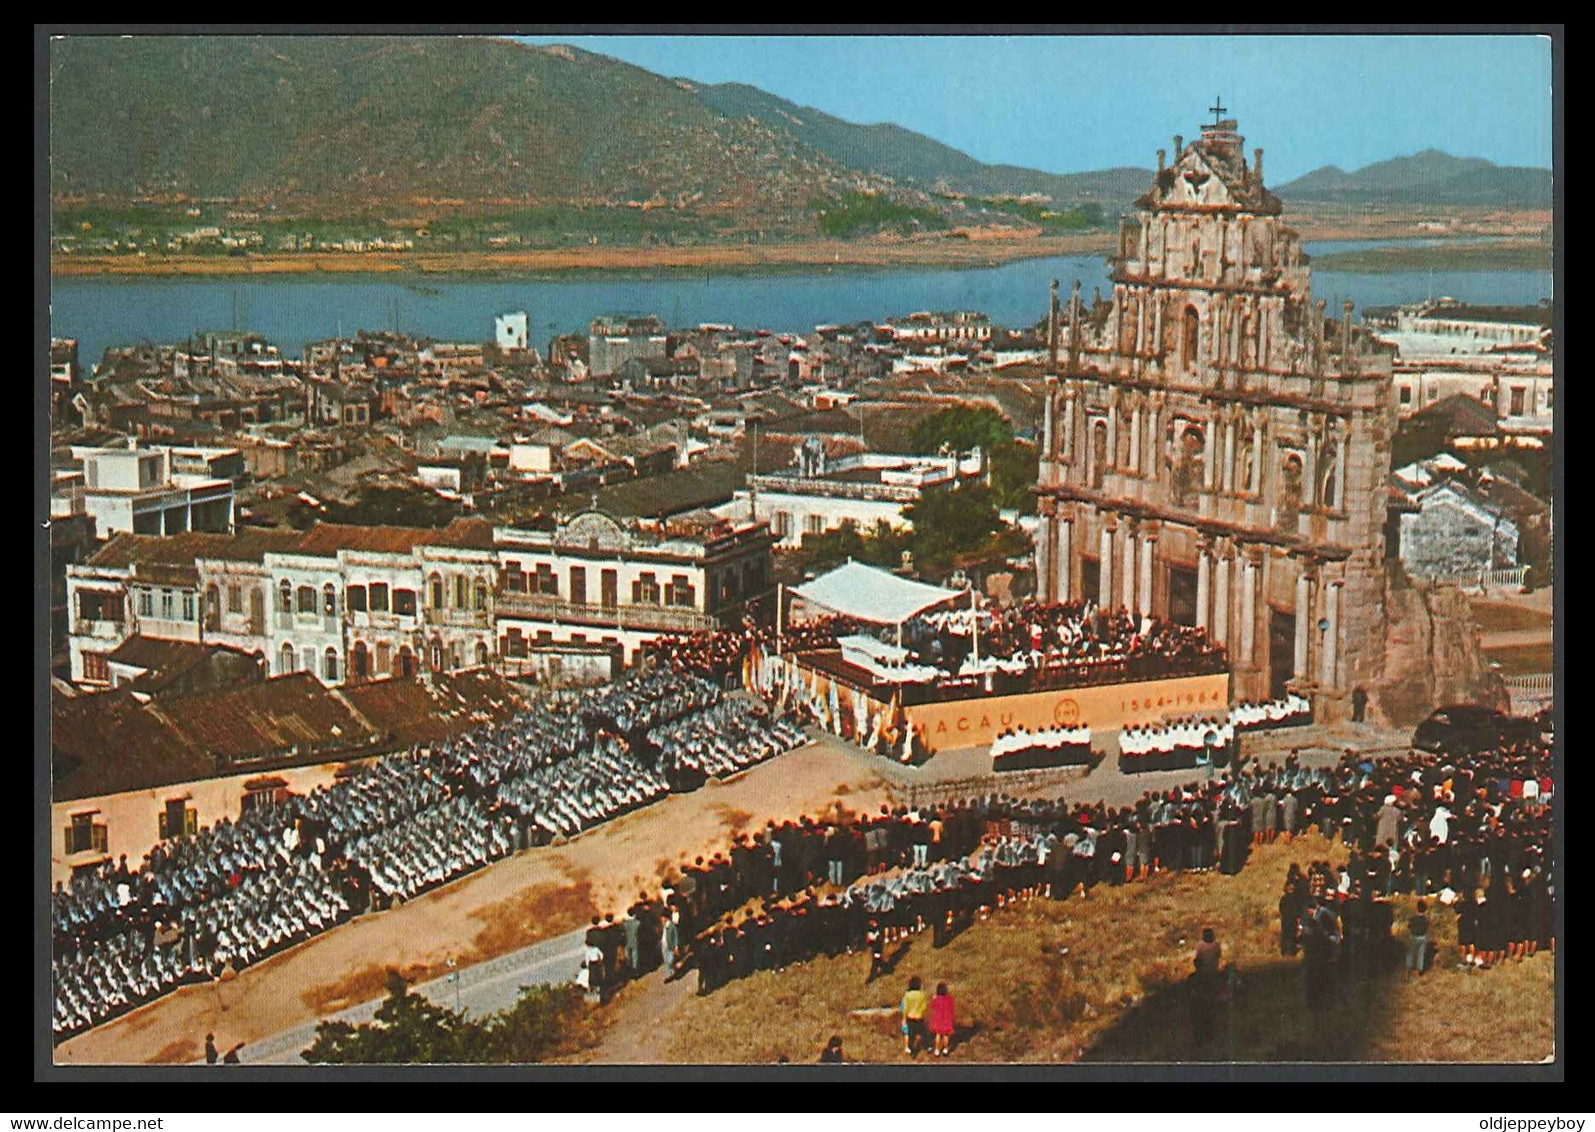 Post Card - Macau - Jesuits At The Ruins Of St. Paulo Dec. 8 1964. UNUSED VERY FINE - China